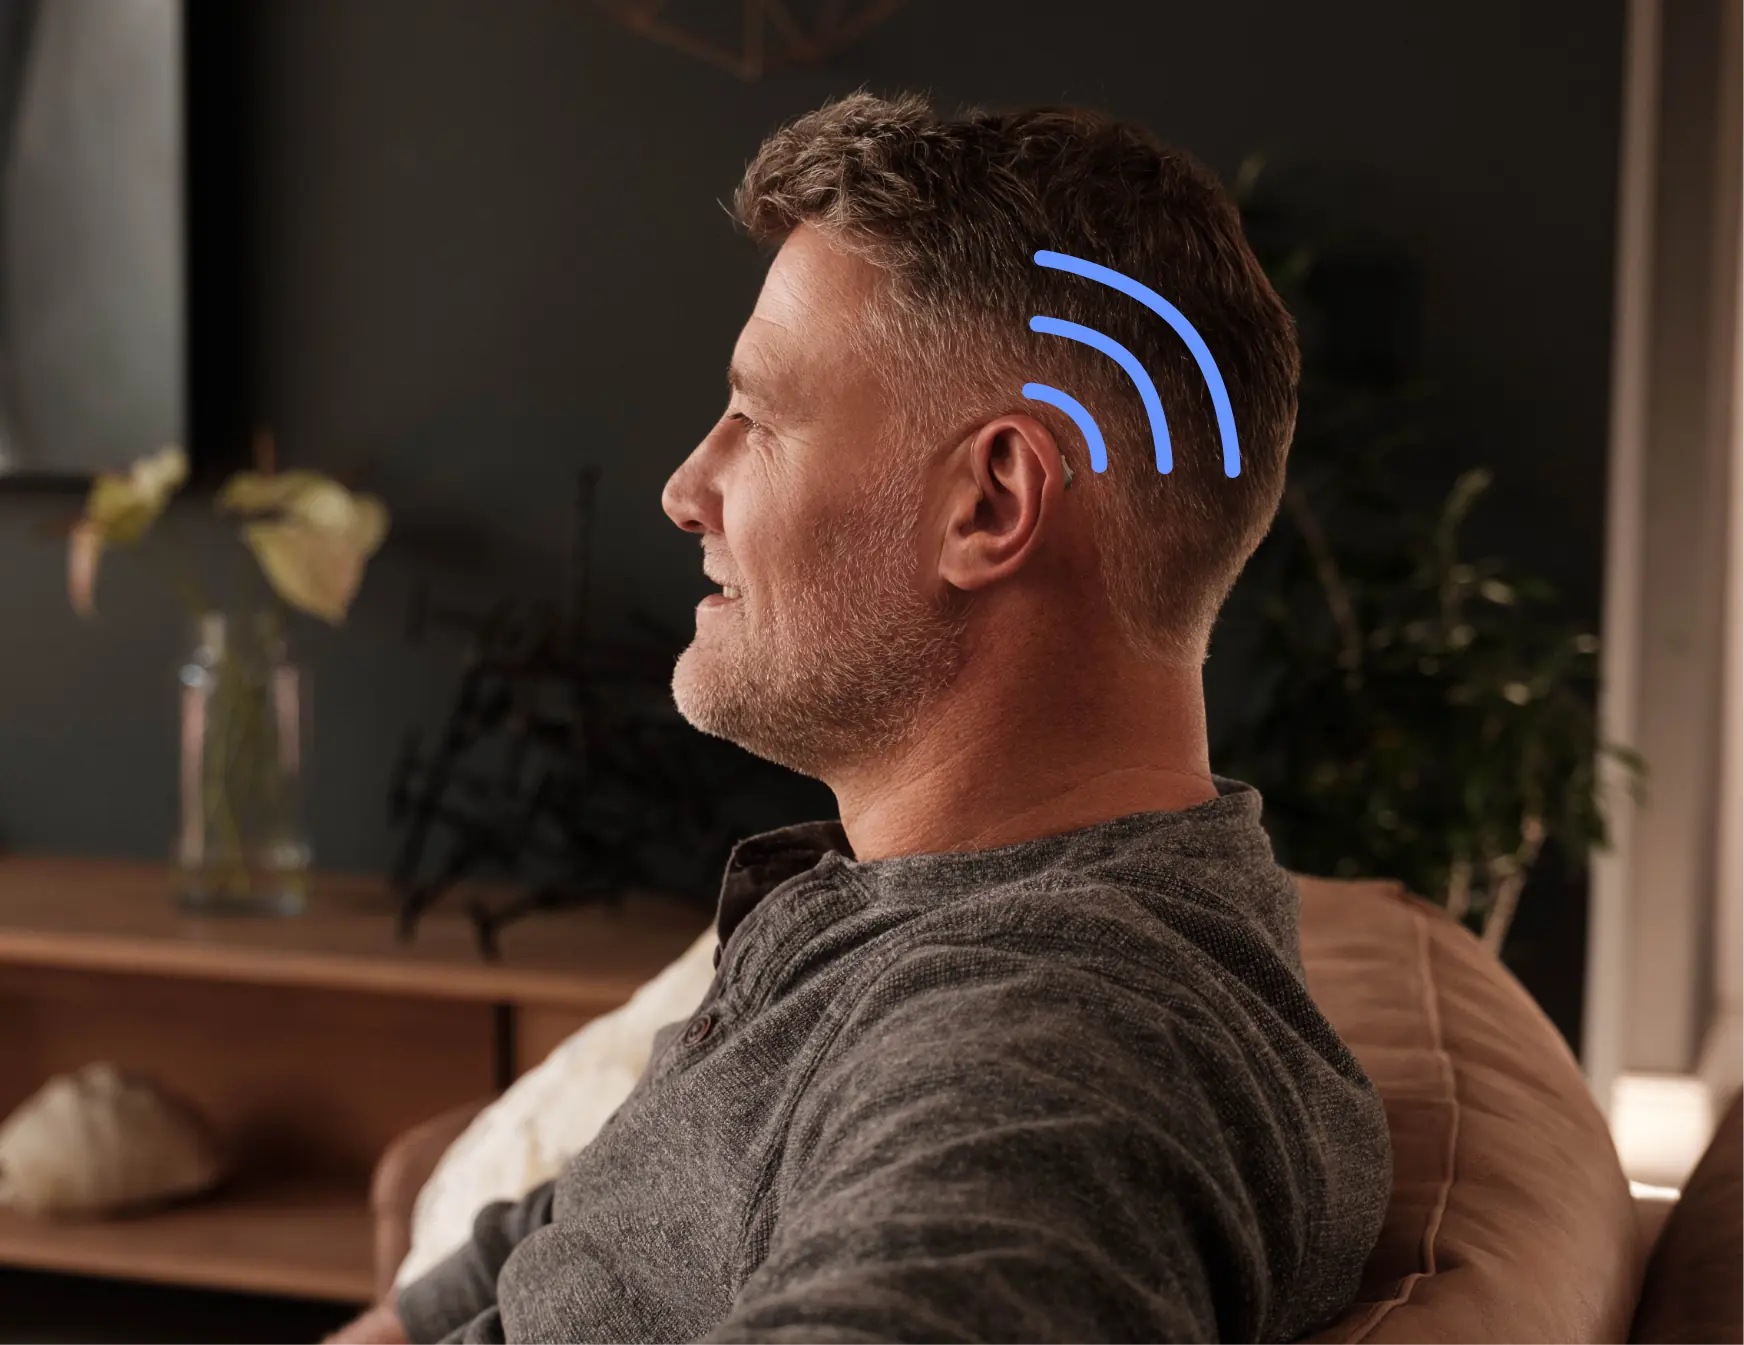 Man wearing Lexie B2 Powered by Bose hearing aids